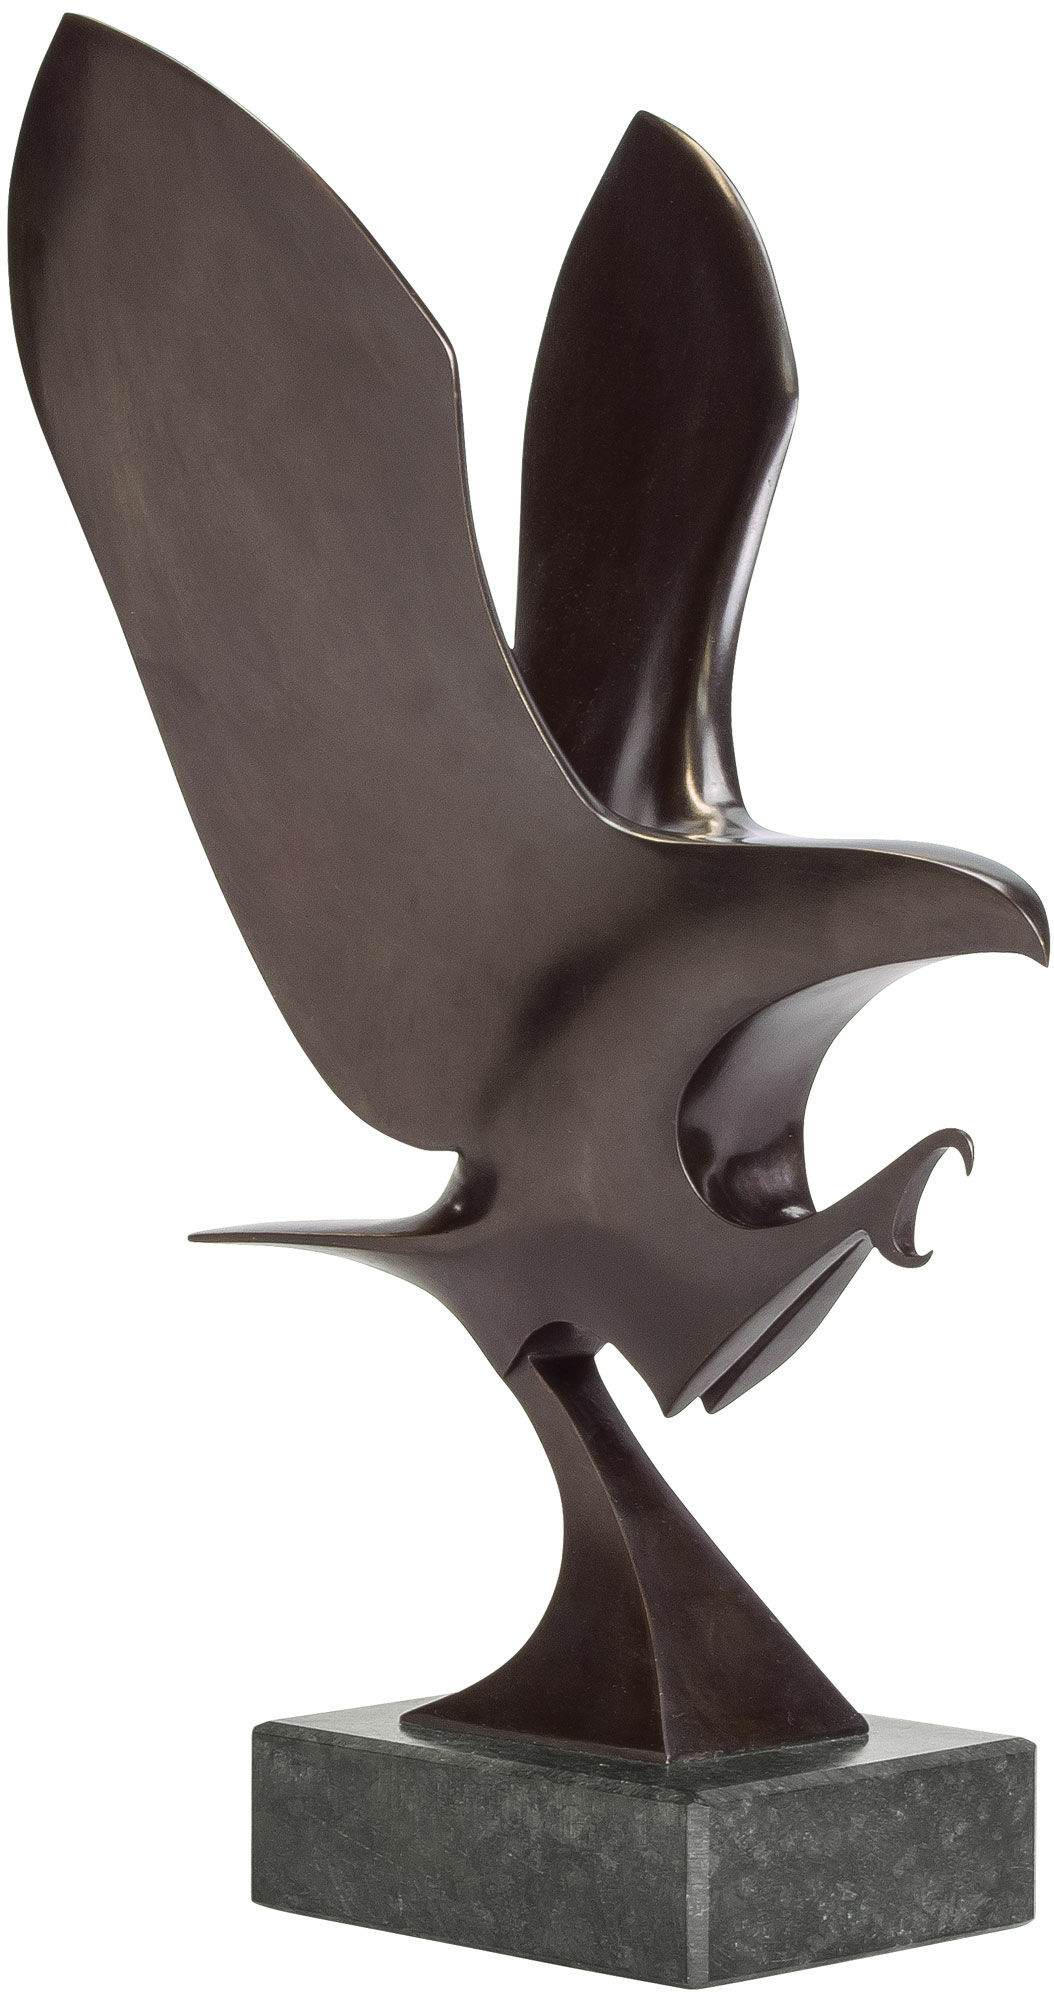 Sculptuur "Kleine adelaar", brons von SIME